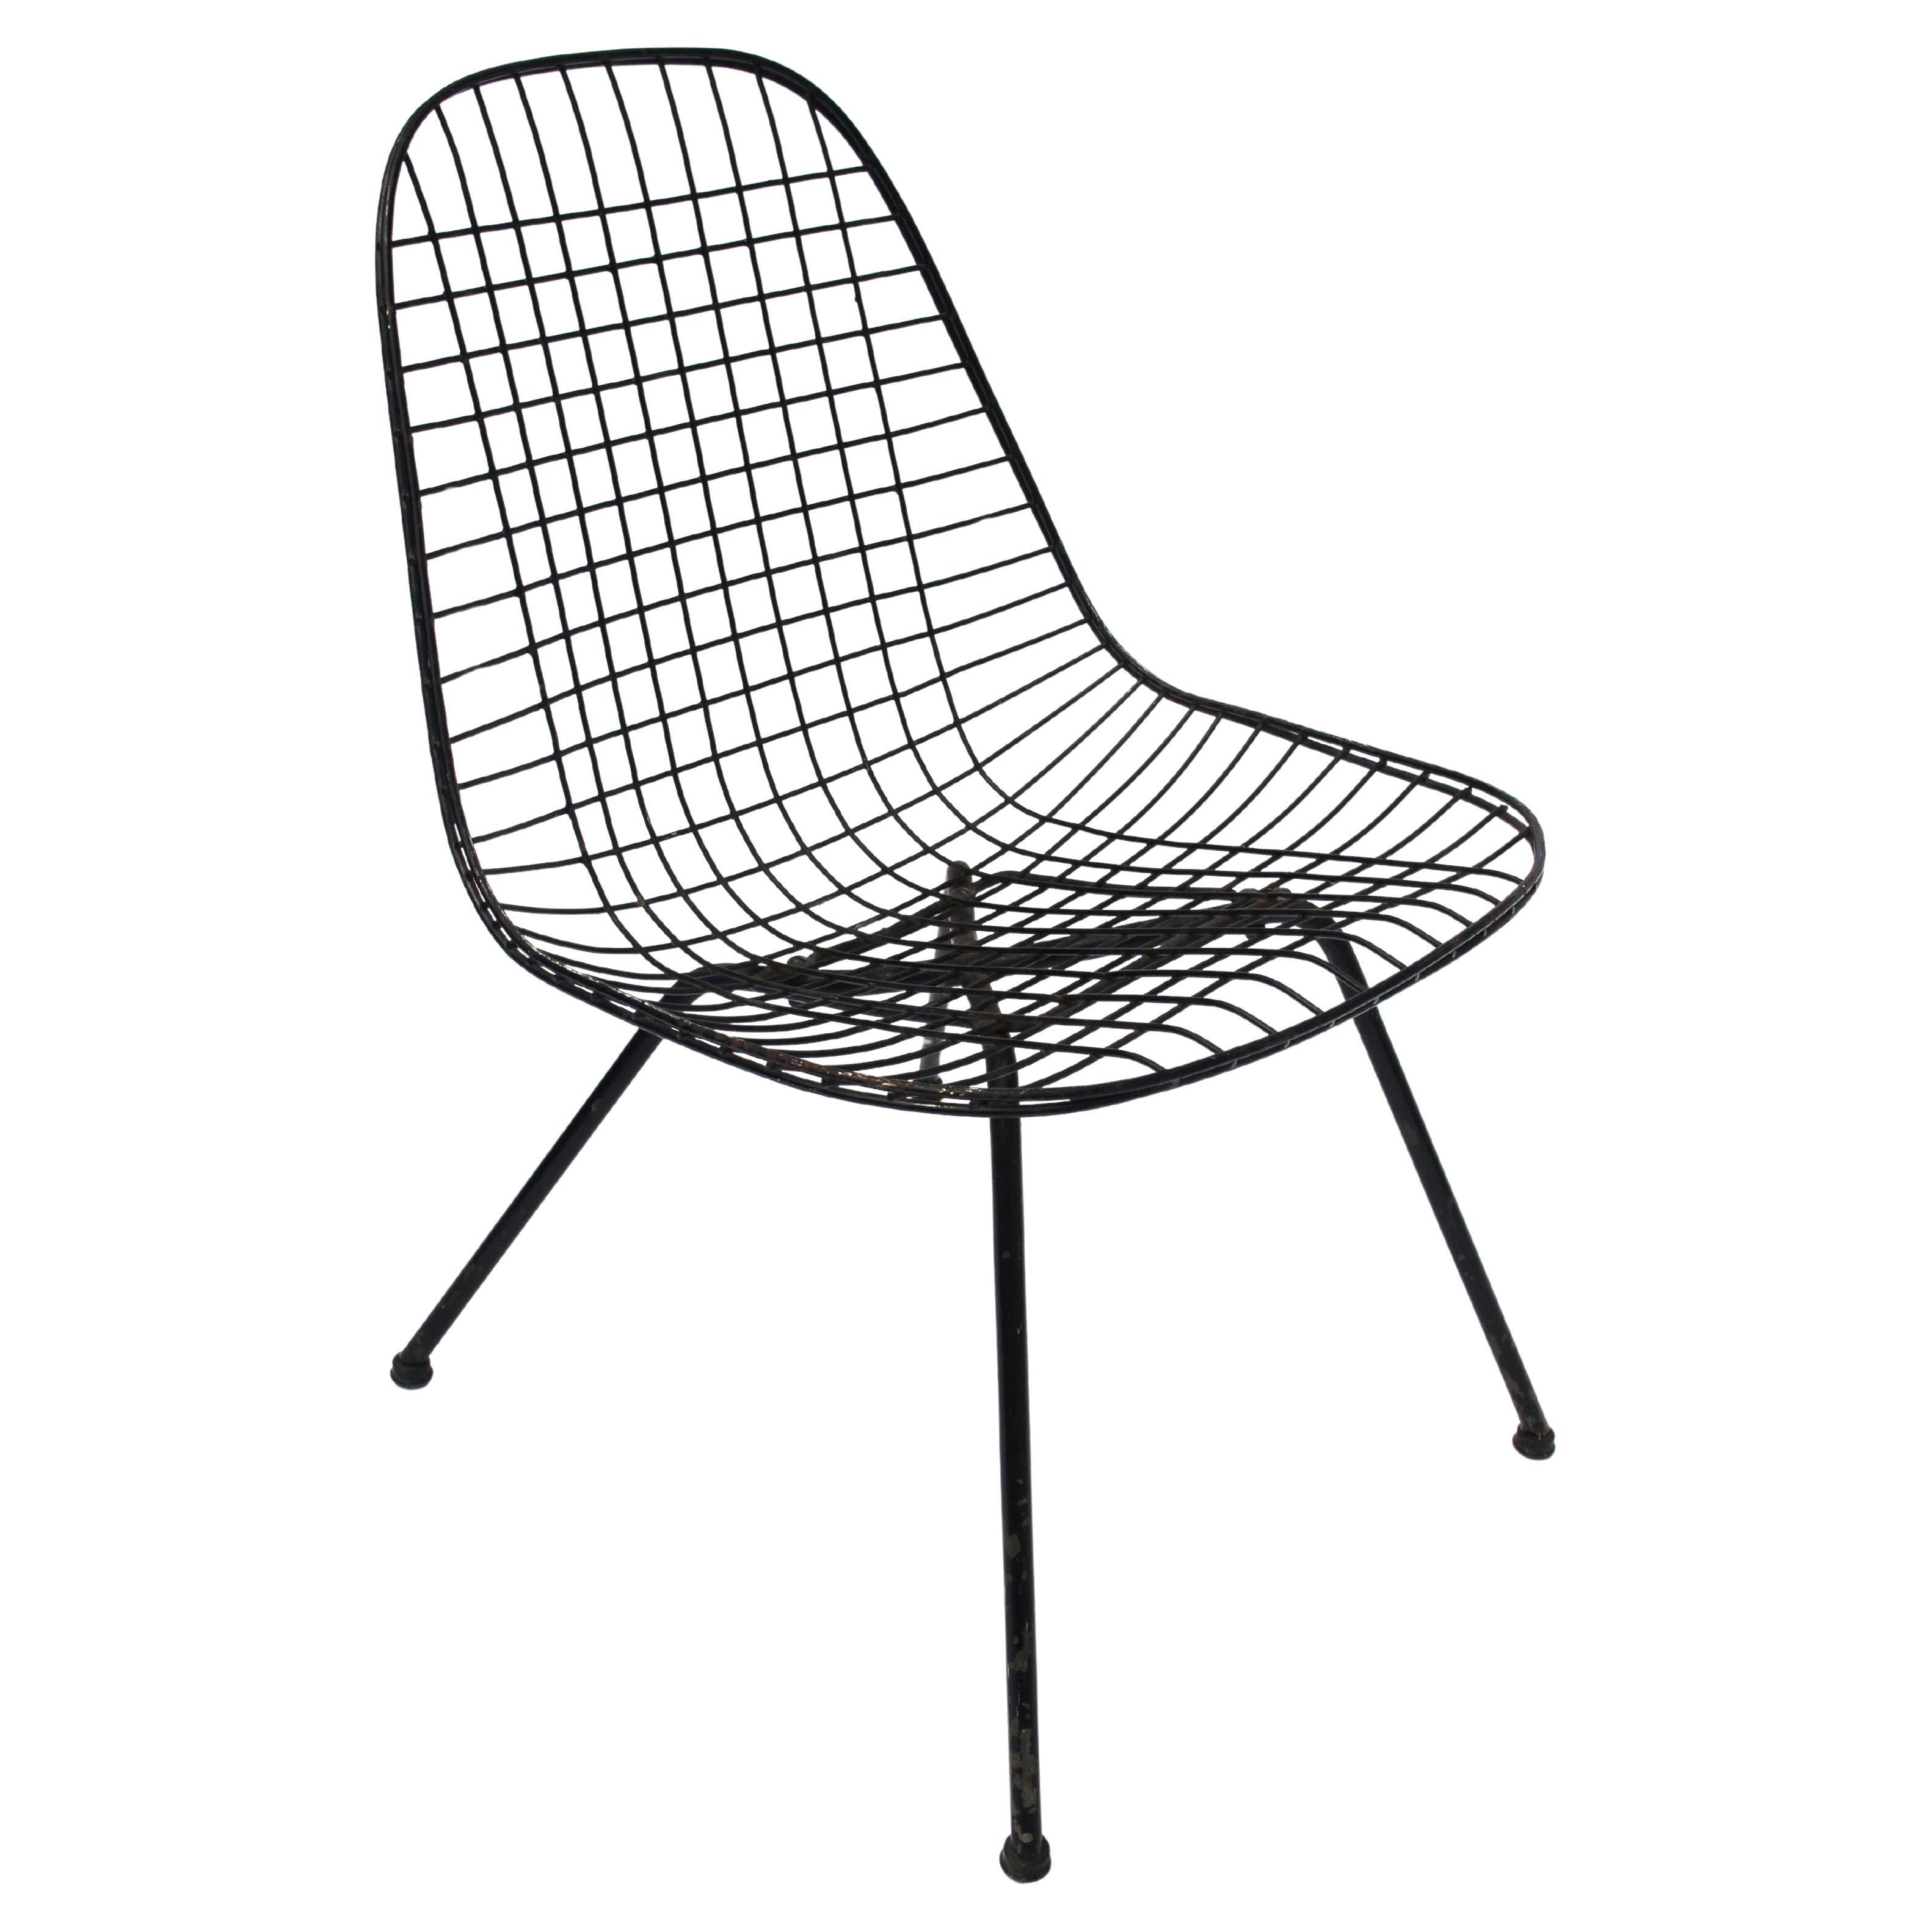 How do I adjust a Herman Miller chair?